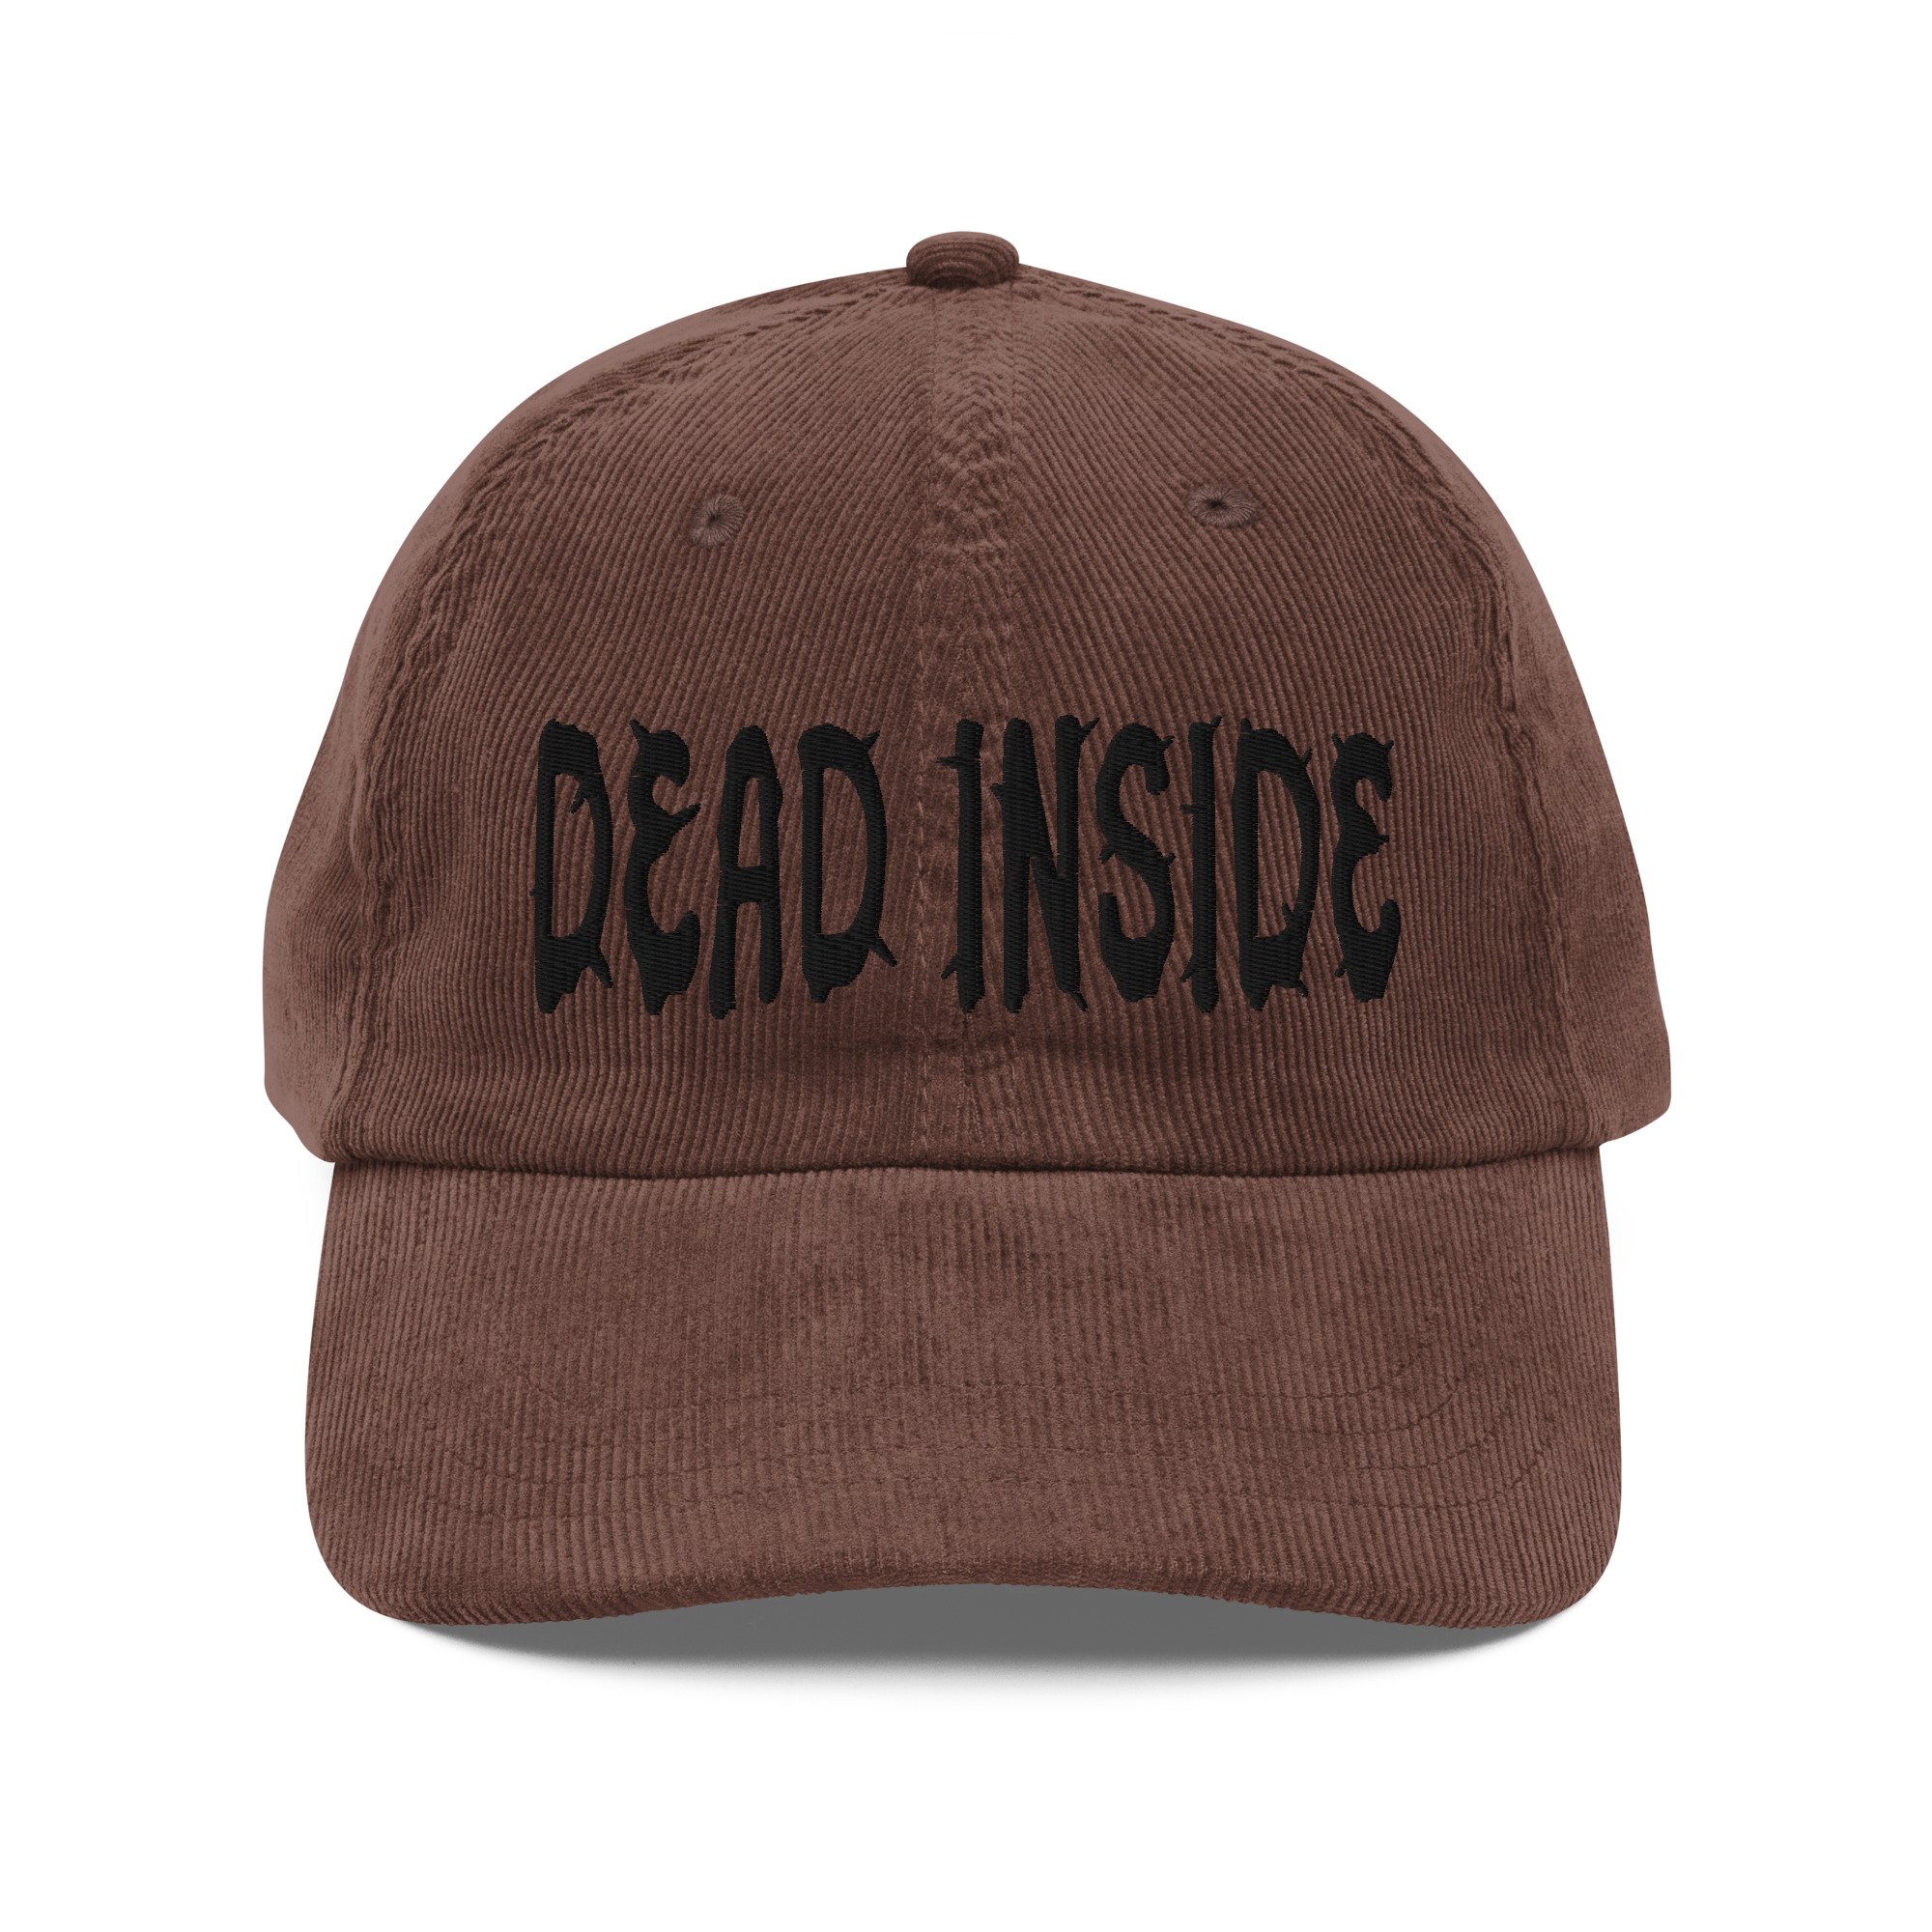 Featured image for “Dead Inside - Vintage corduroy cap”